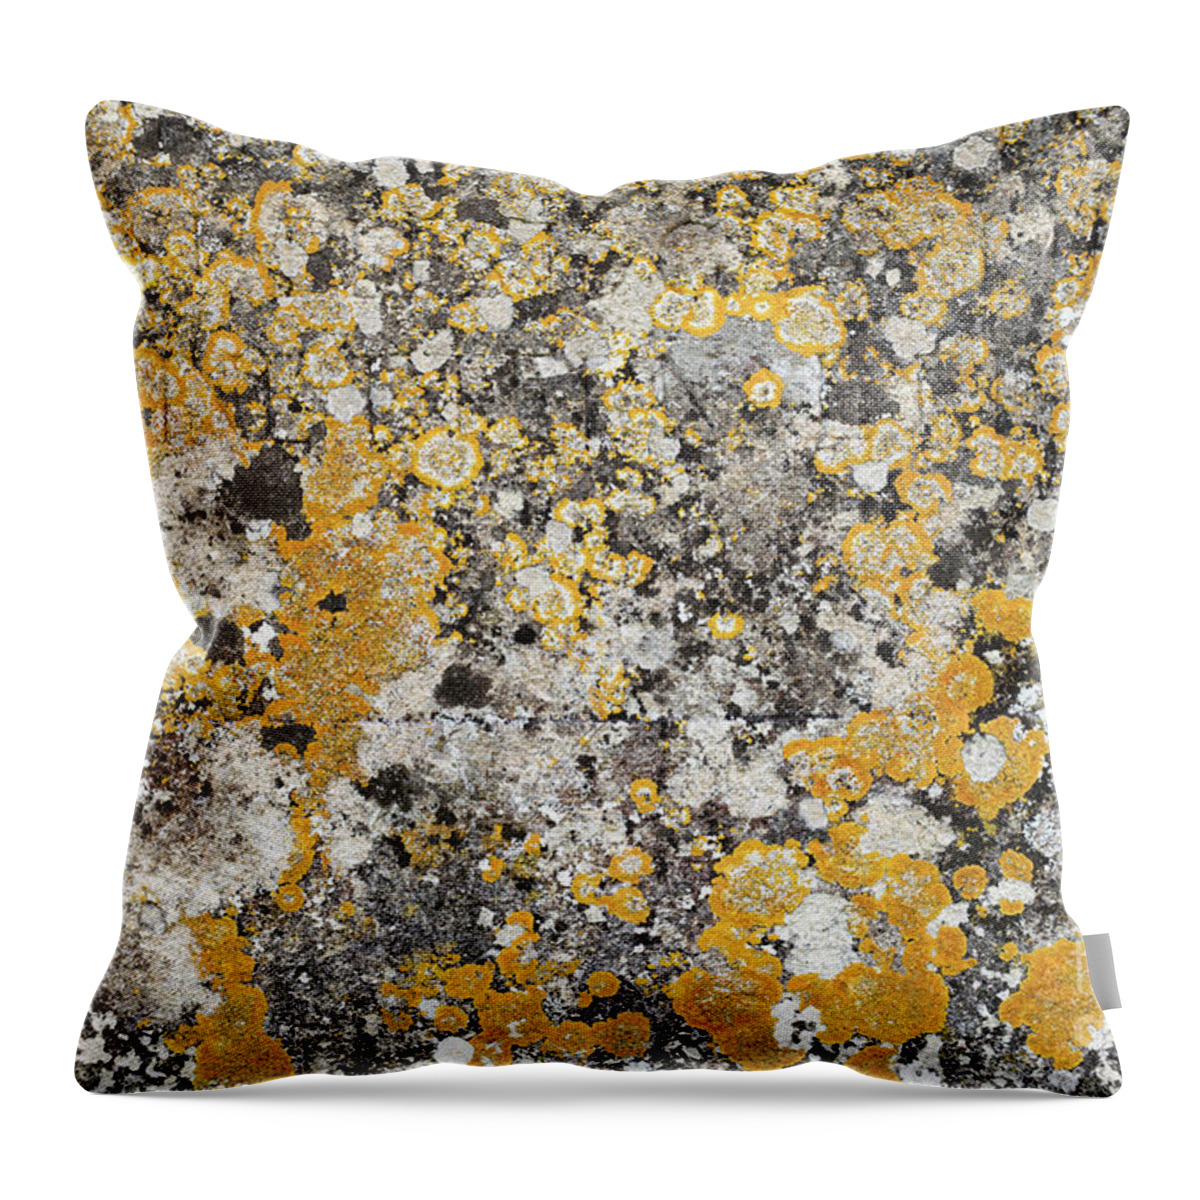 Lichen Throw Pillow featuring the photograph Lichen Pattern by Tim Gainey